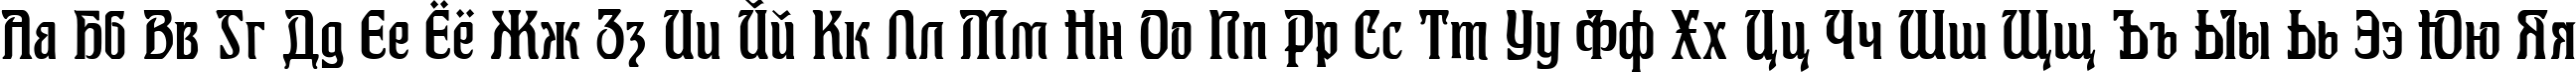 Пример написания русского алфавита шрифтом Augusta Two